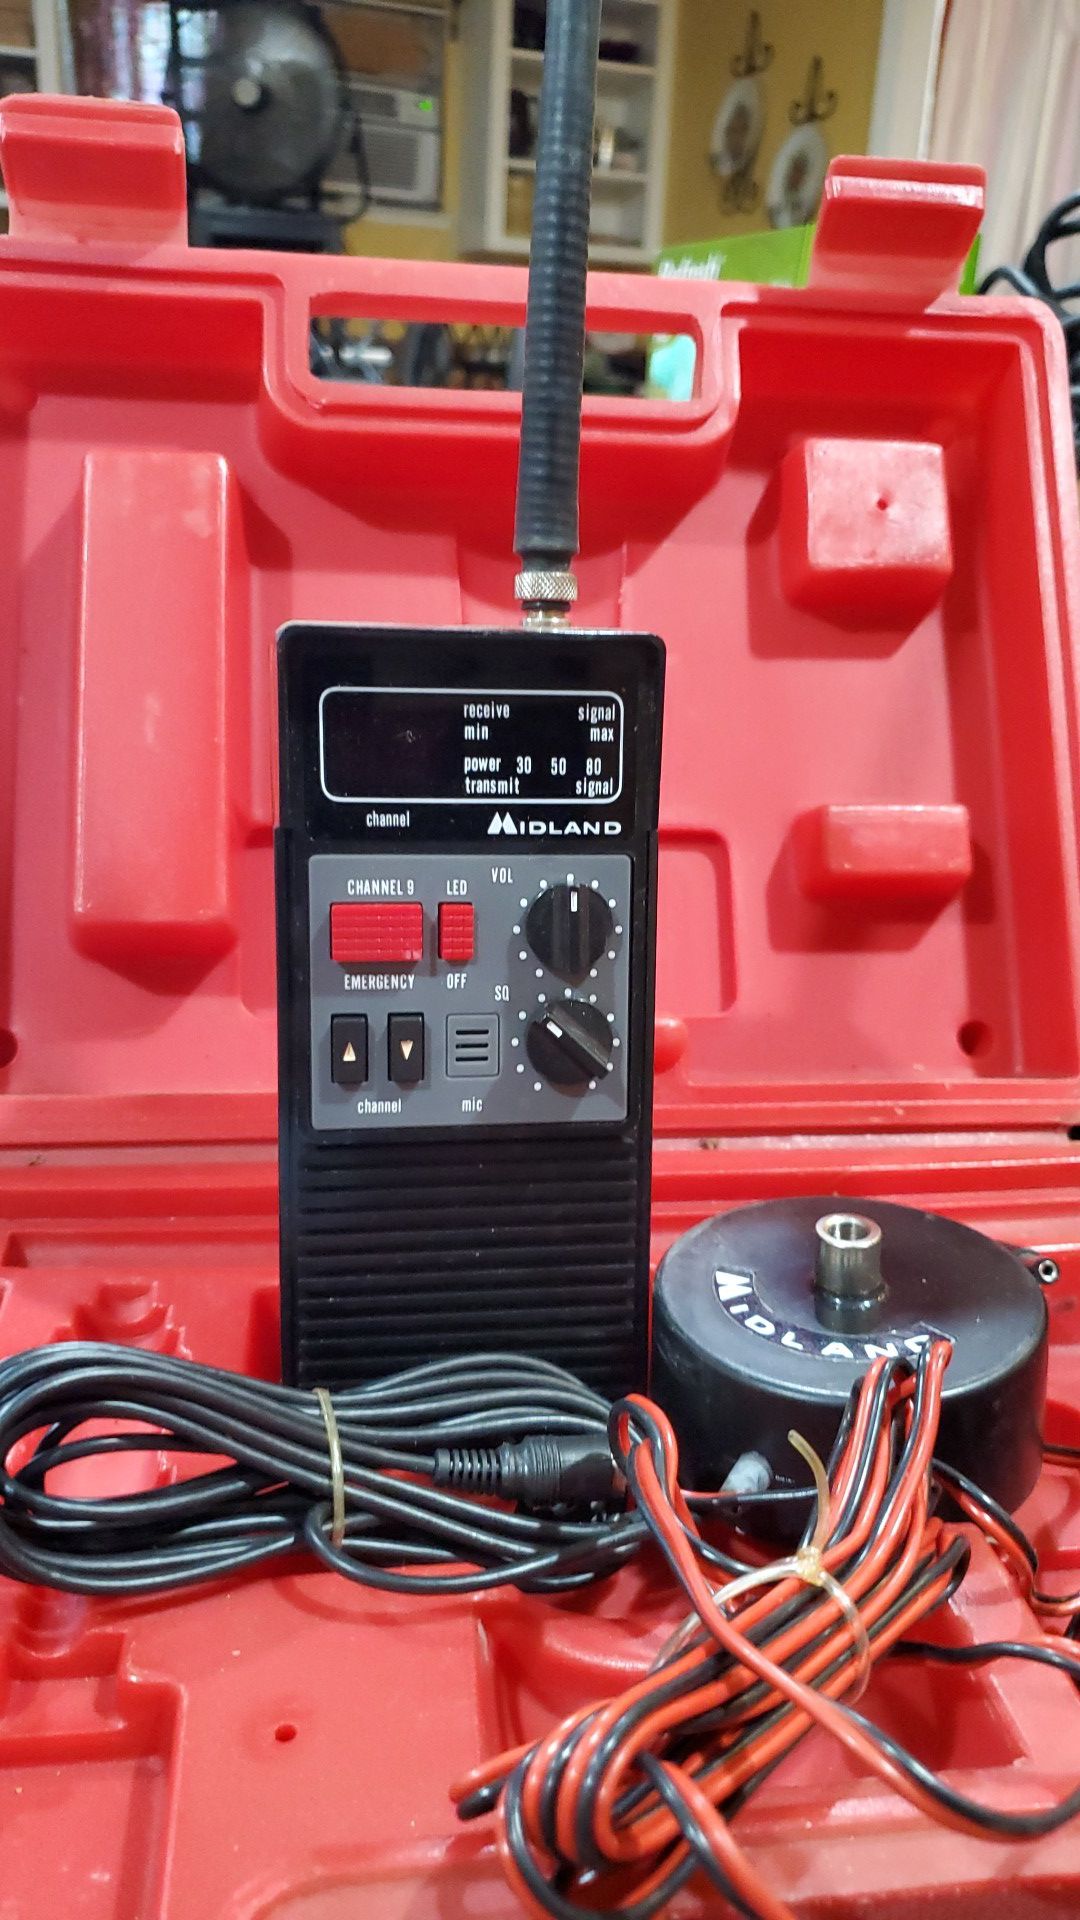 Midland Portable 40 channel handheld CB Radio emergency Ready rescue kit